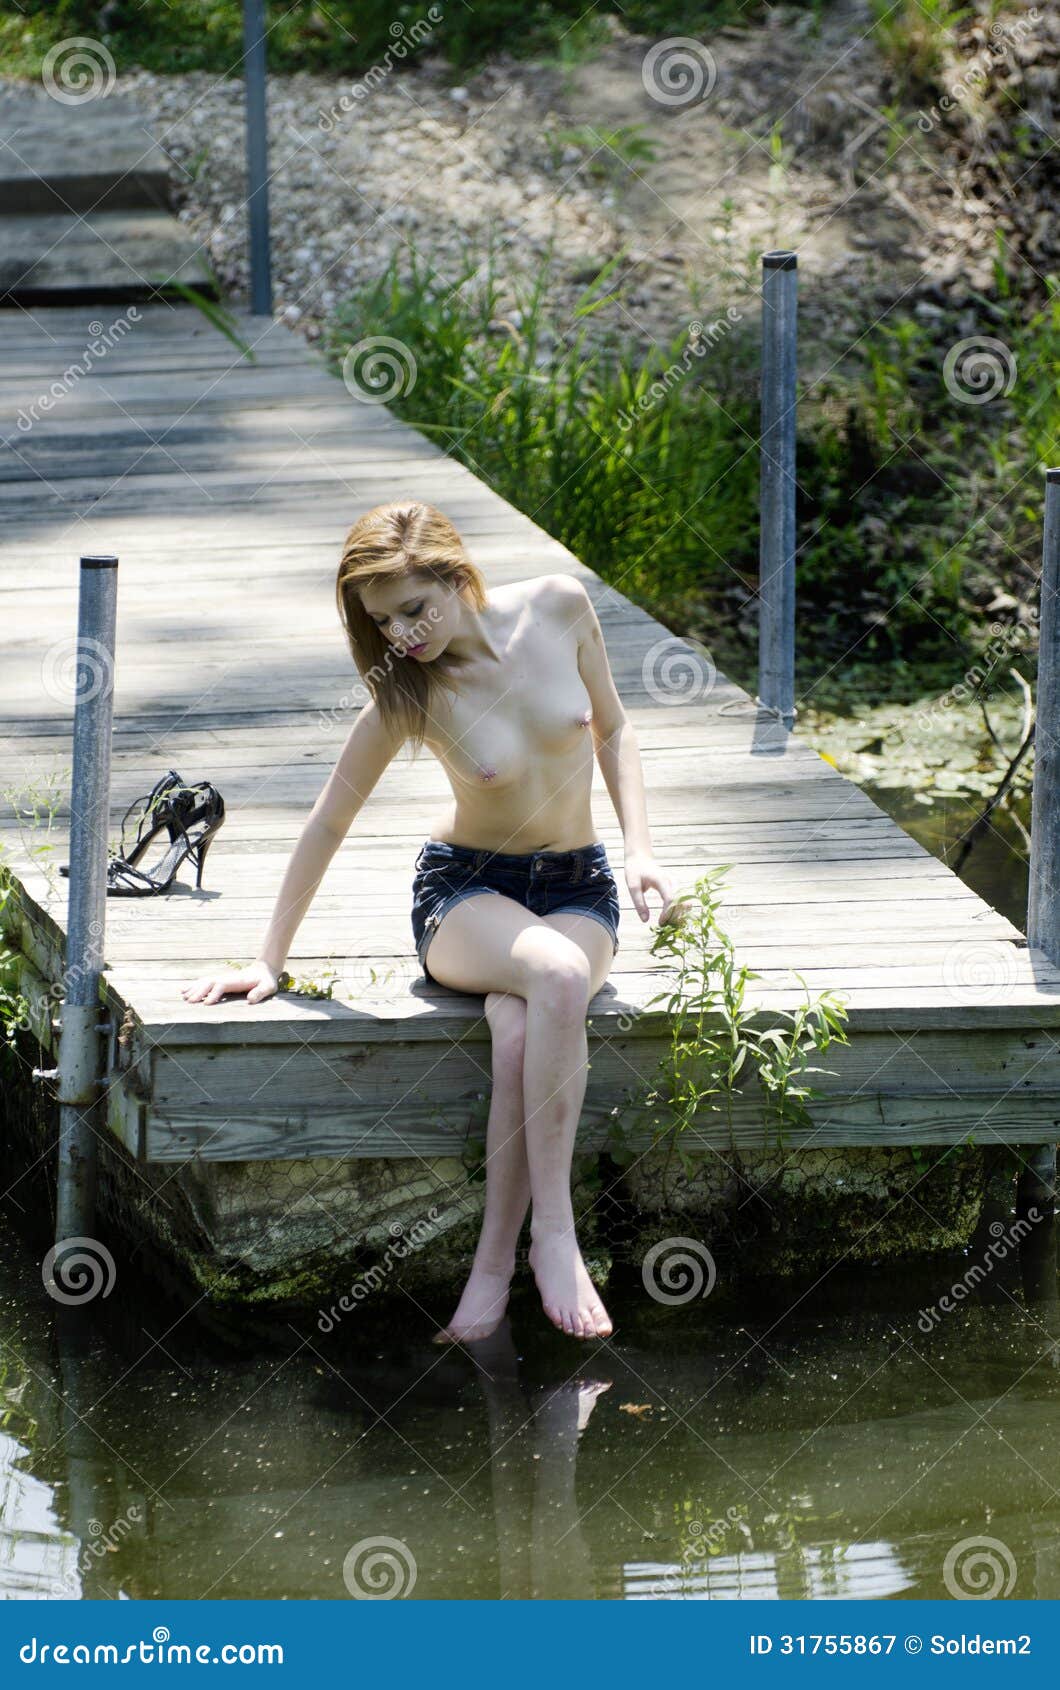 outdoor skinny dipping women